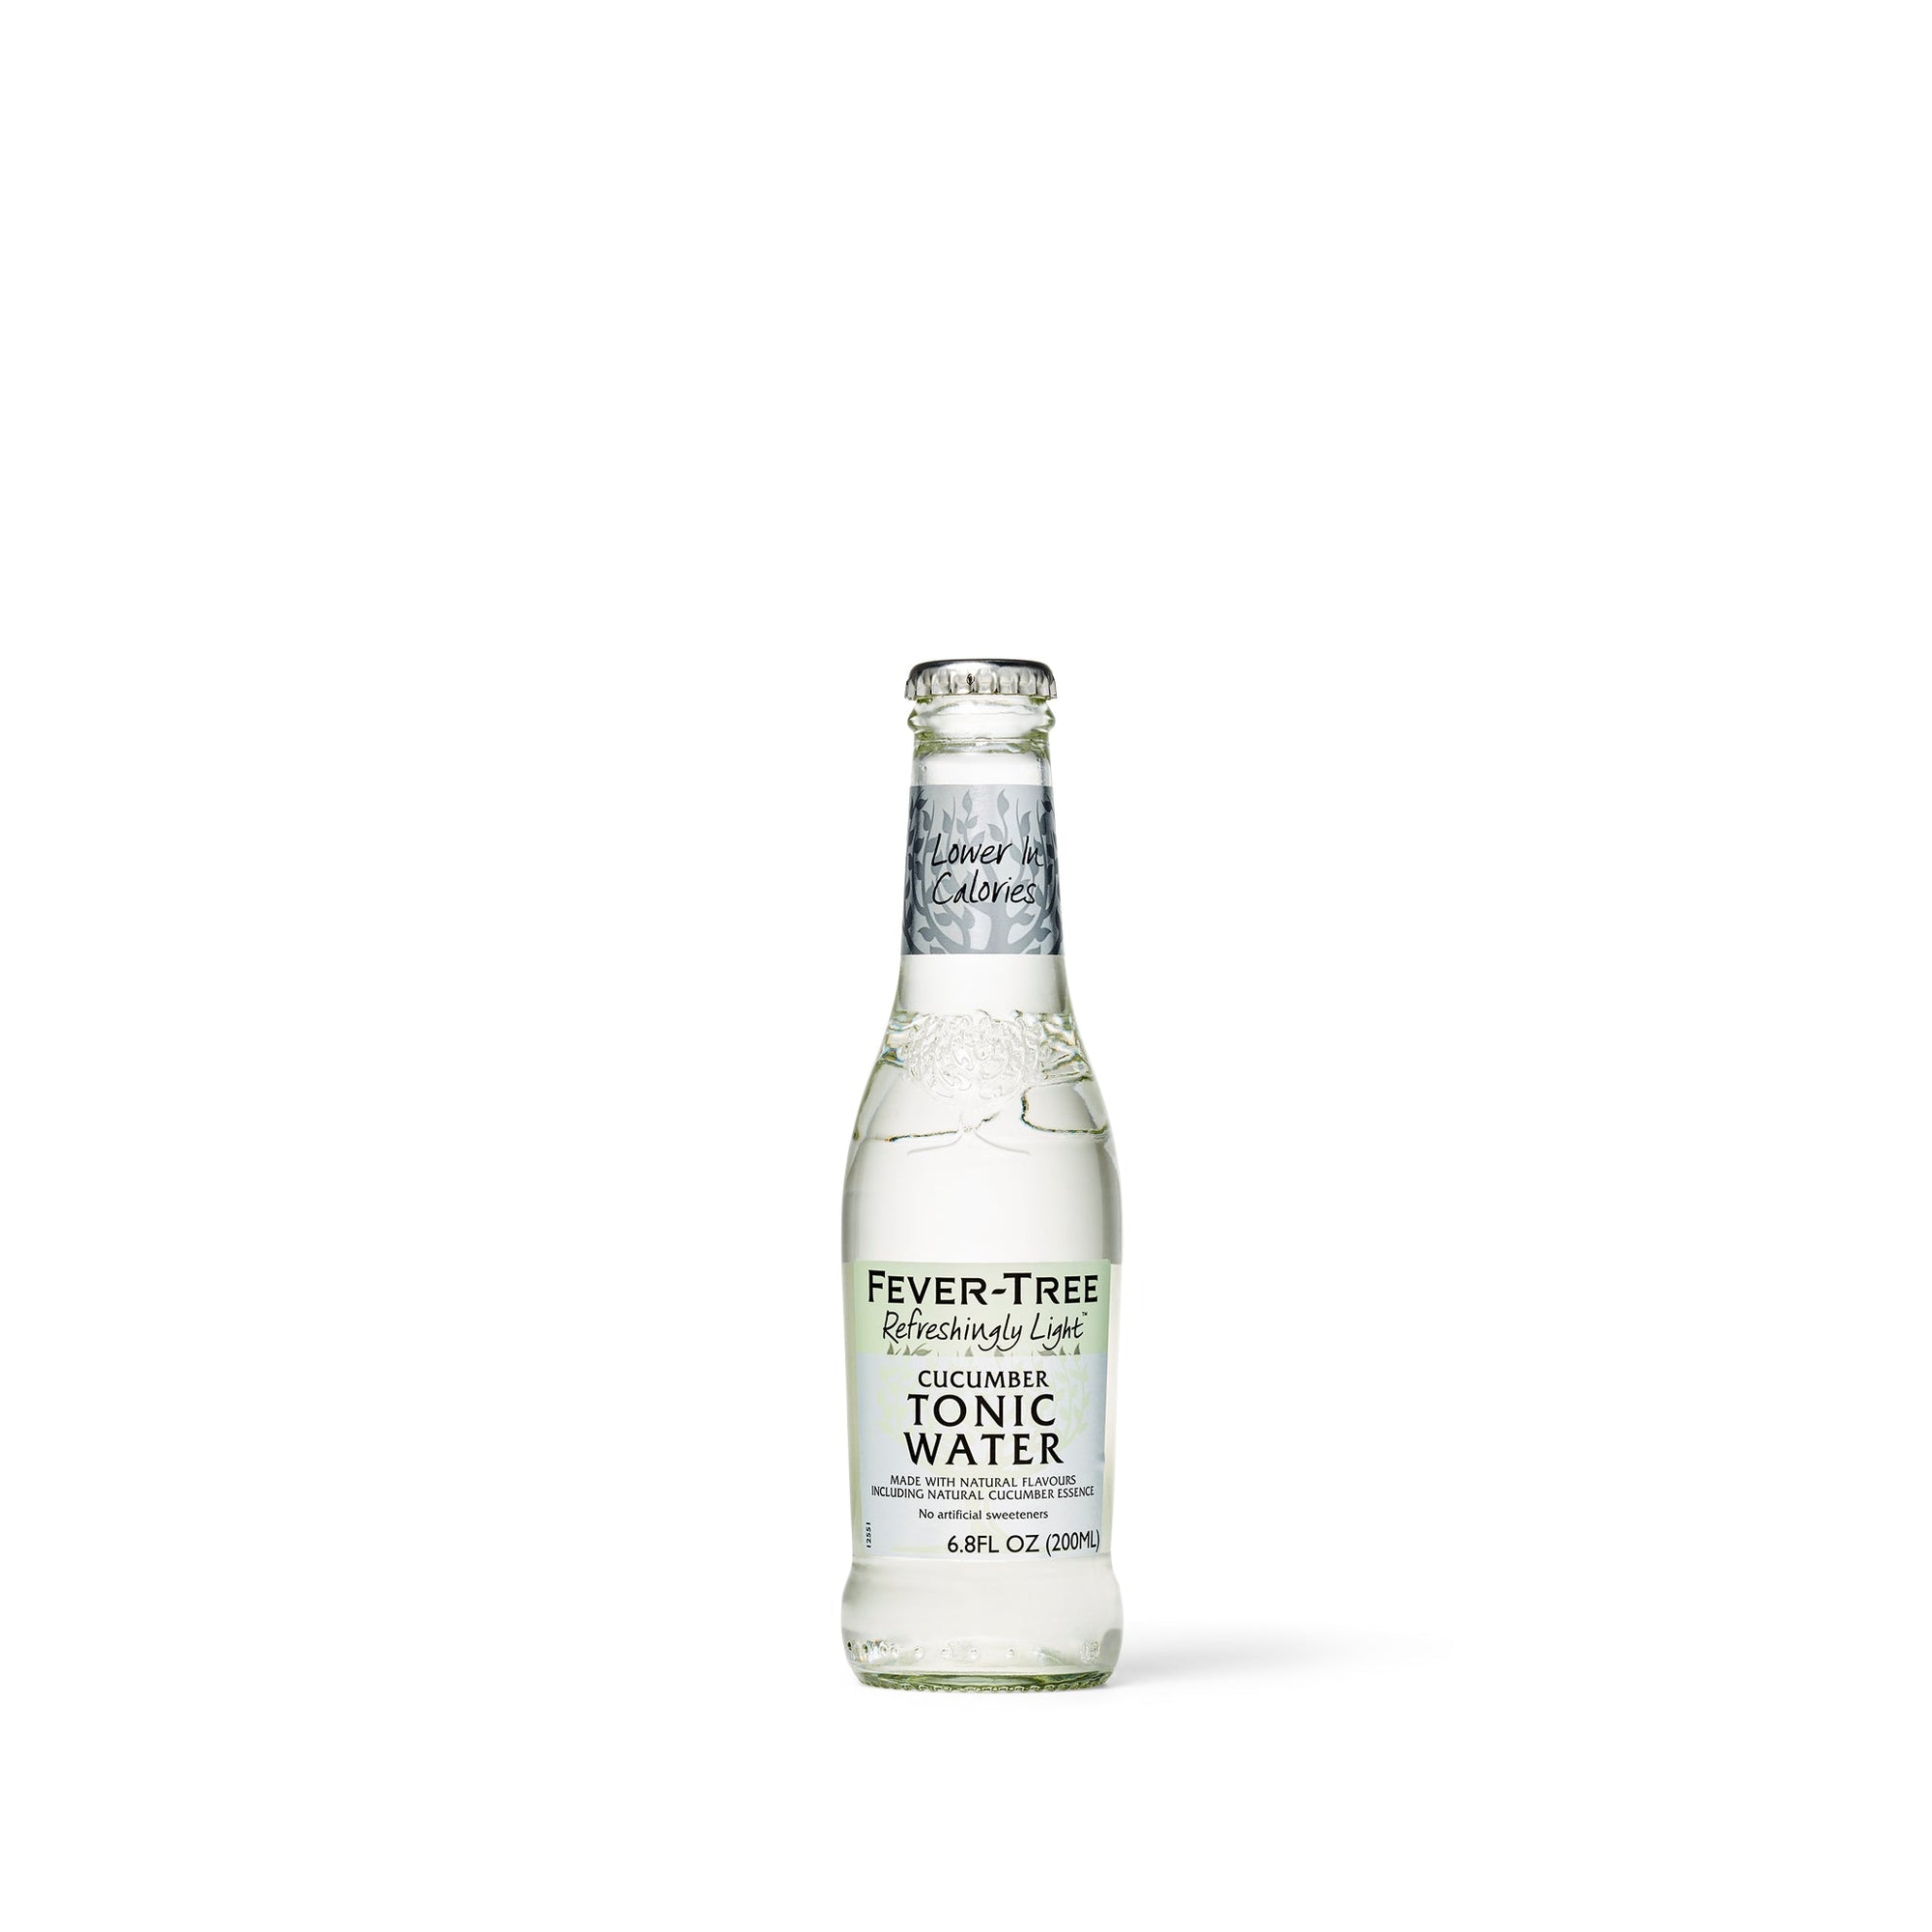 Fever Tree - Refreshingly Light Cucumber Tonic Water (4-pack) - Boisson